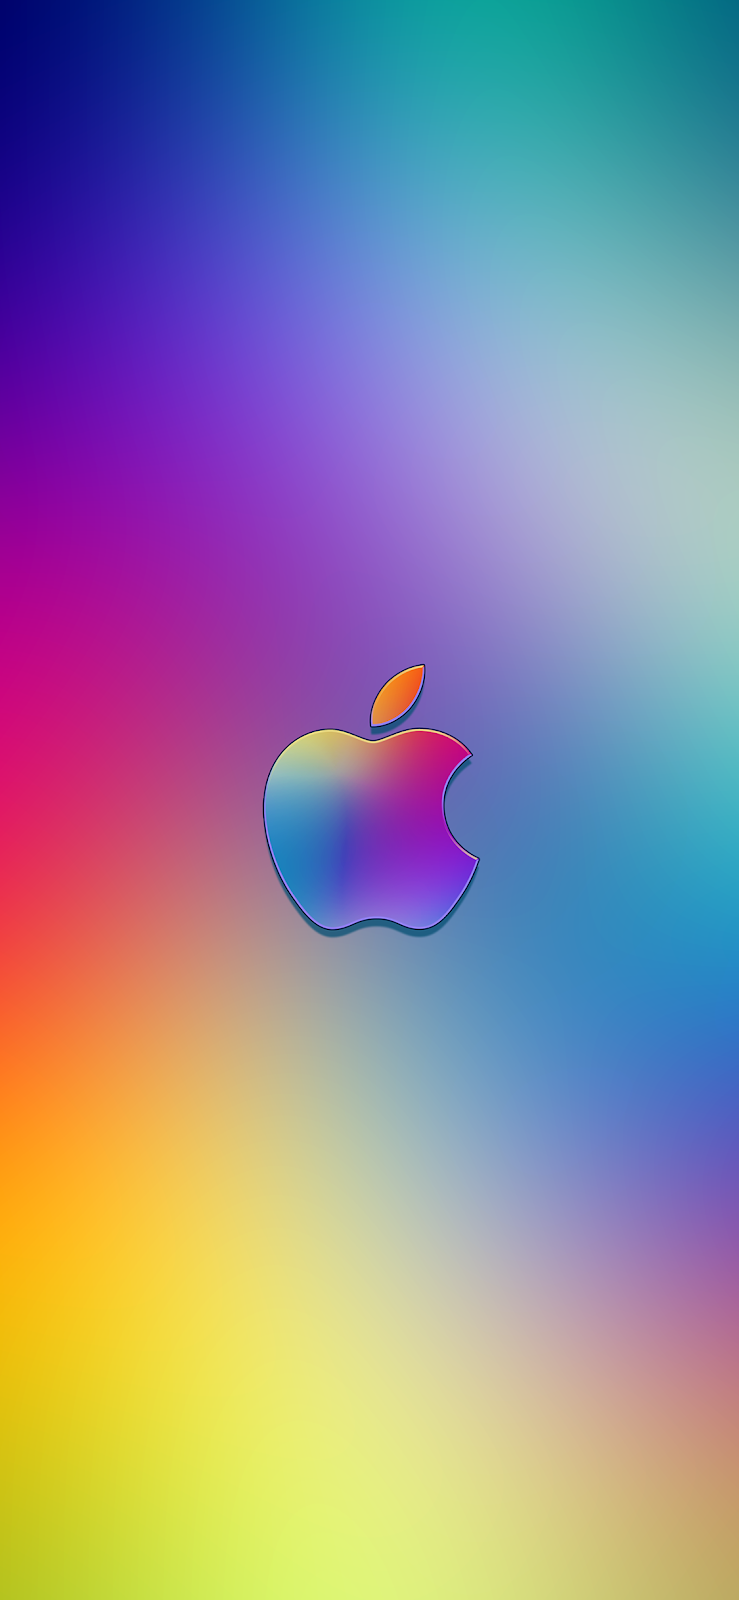 Iphone X Apple Background